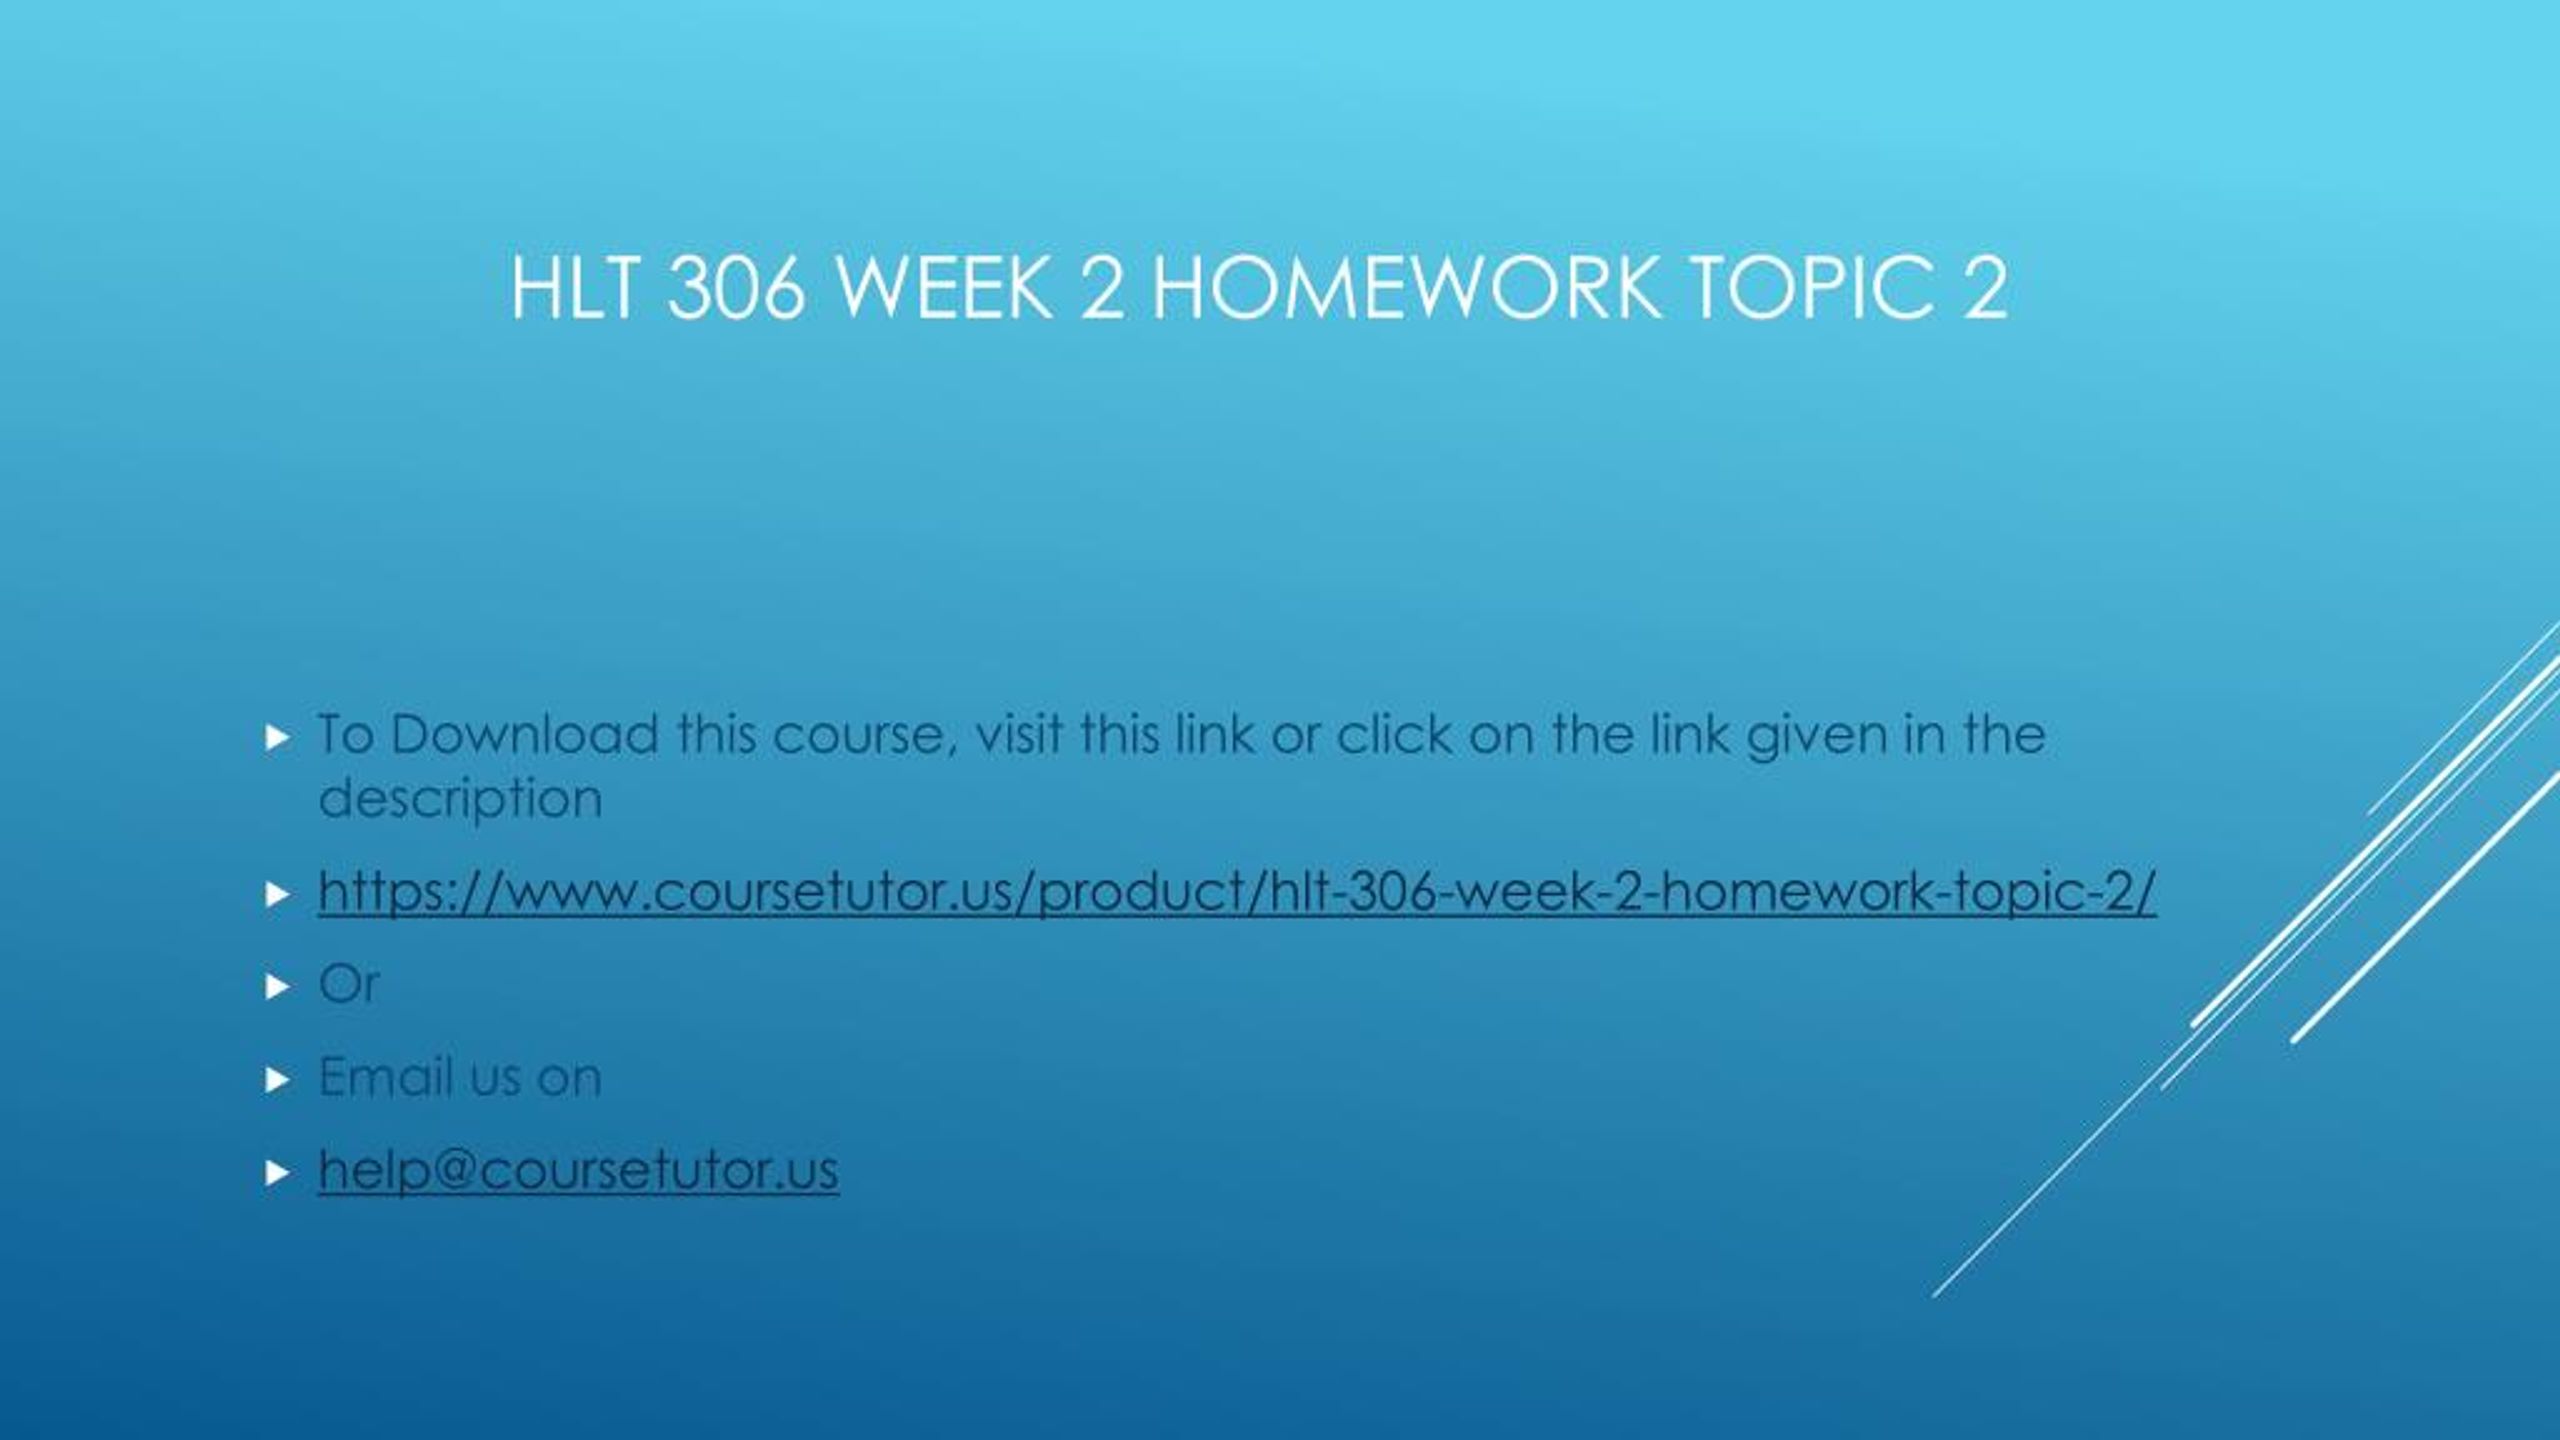 homework topic 2